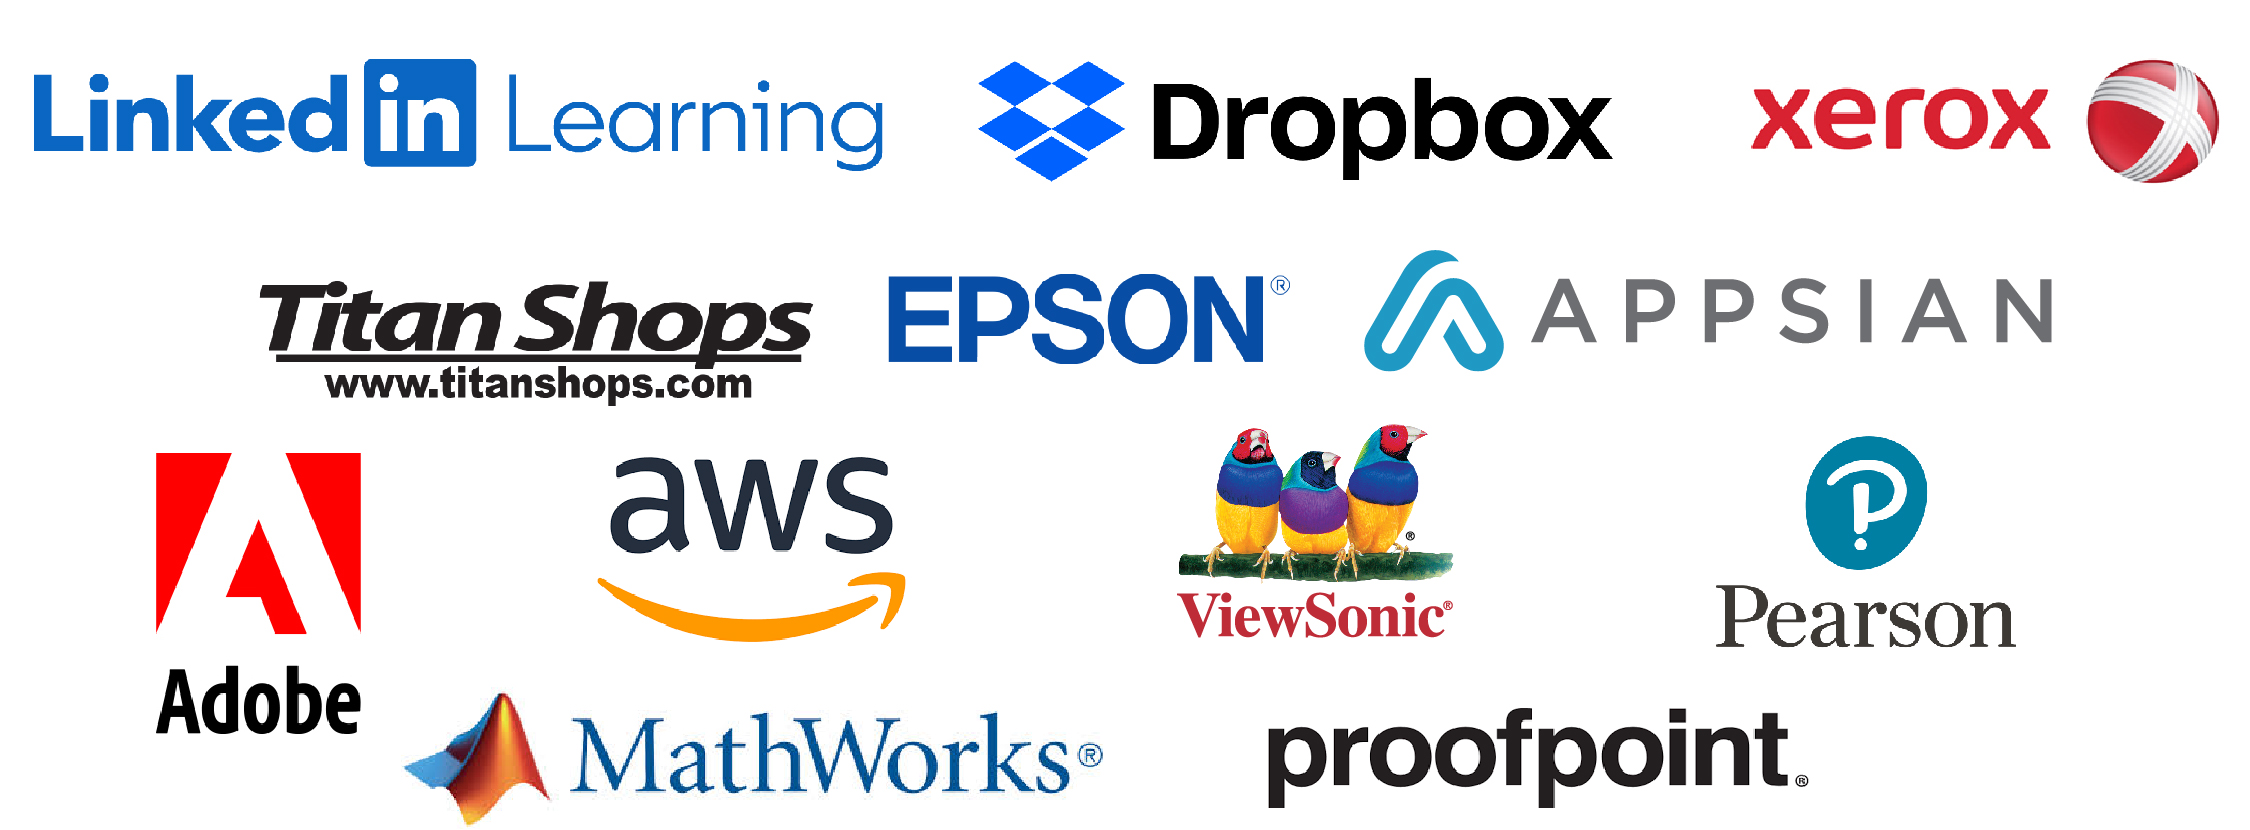 TechDay Partner Logos, see list below image